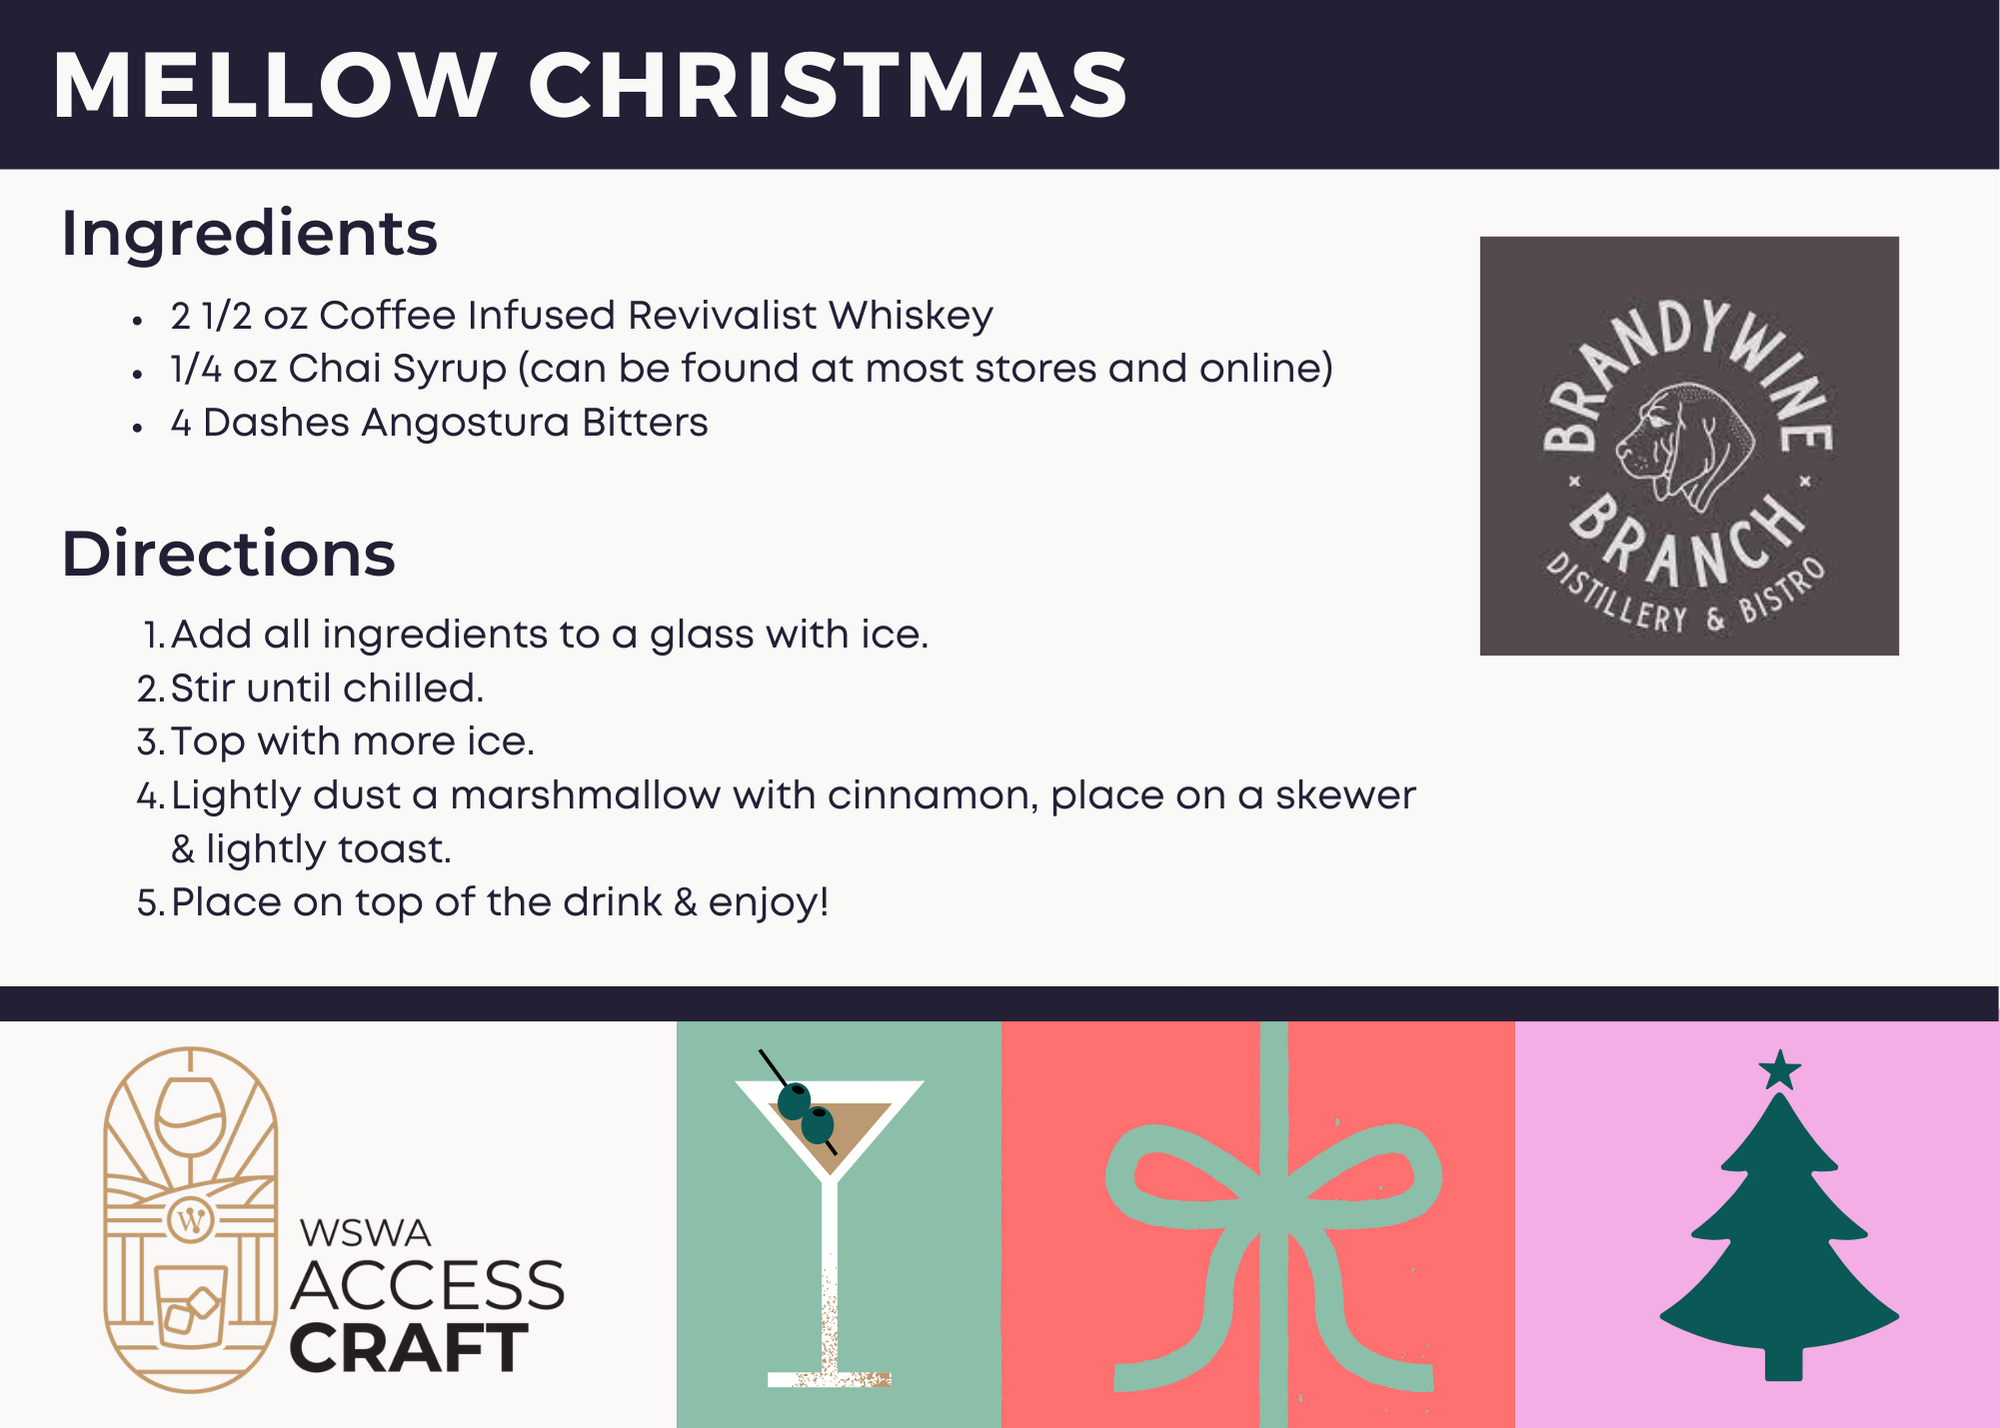 Brandywine Branch Distillers Holiday Recipe Card